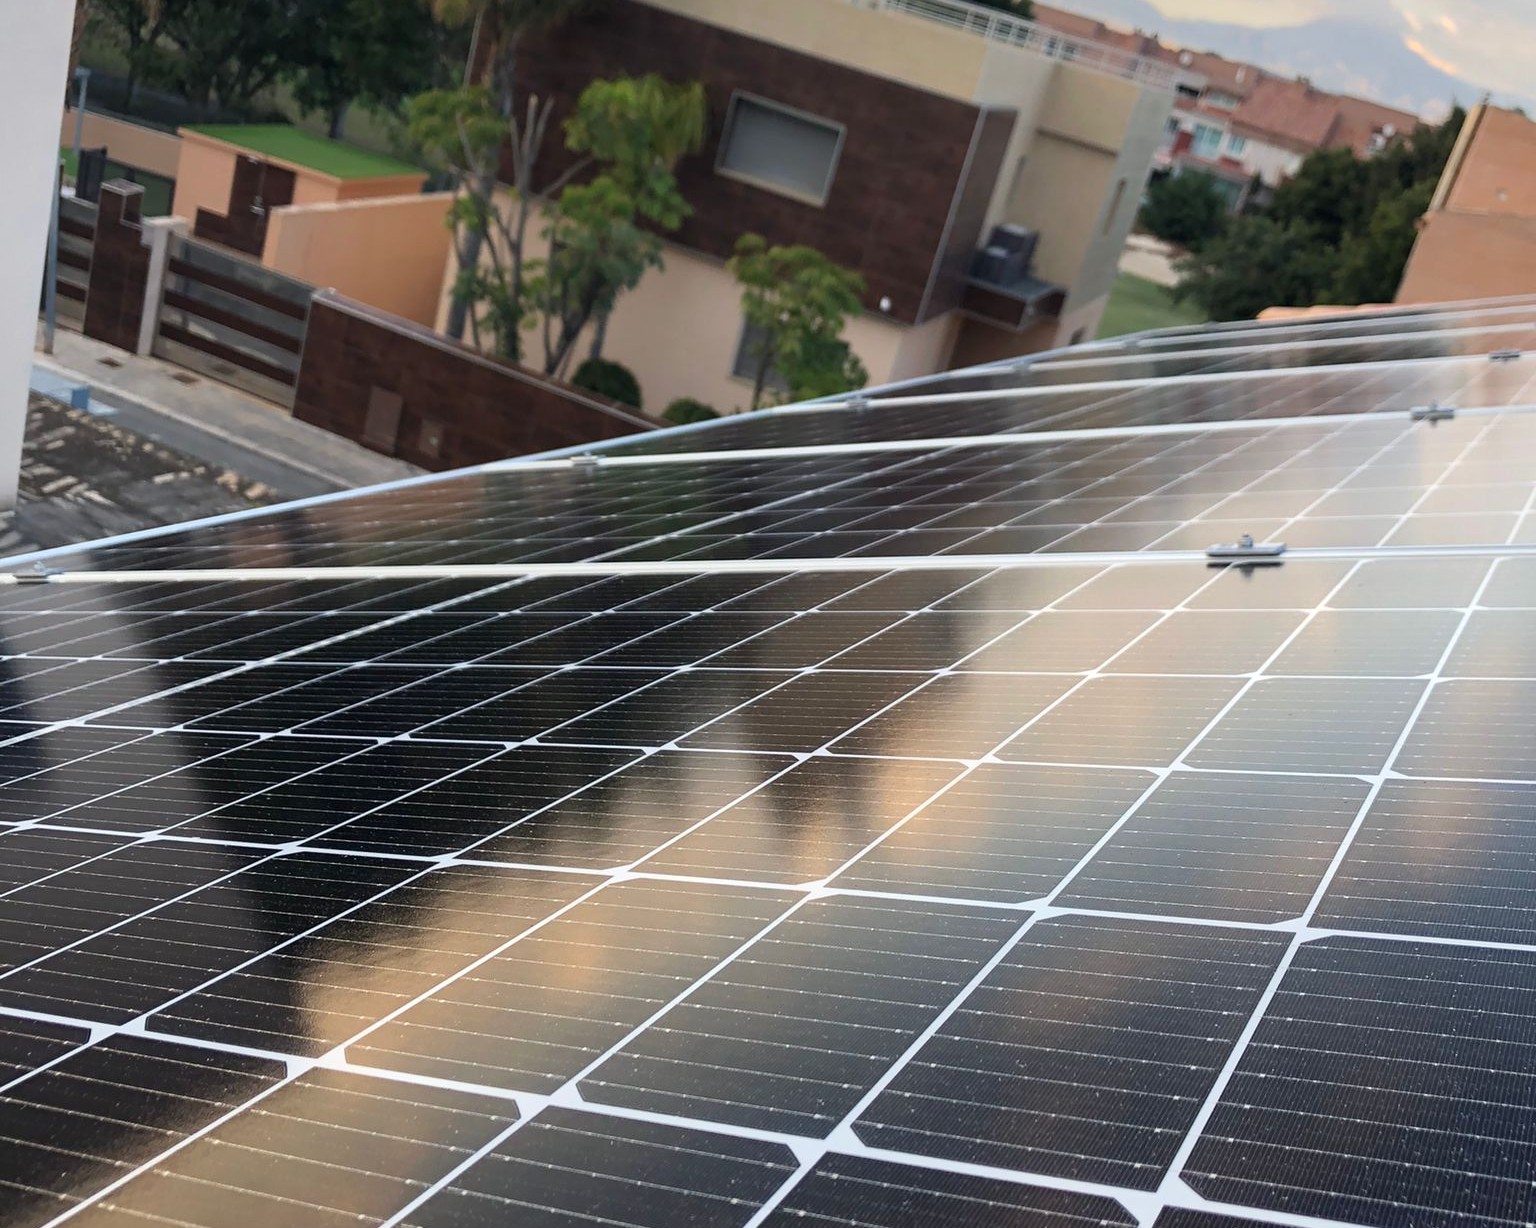 14X 380 wp Solar Panels, Alicante (Hybrid system)